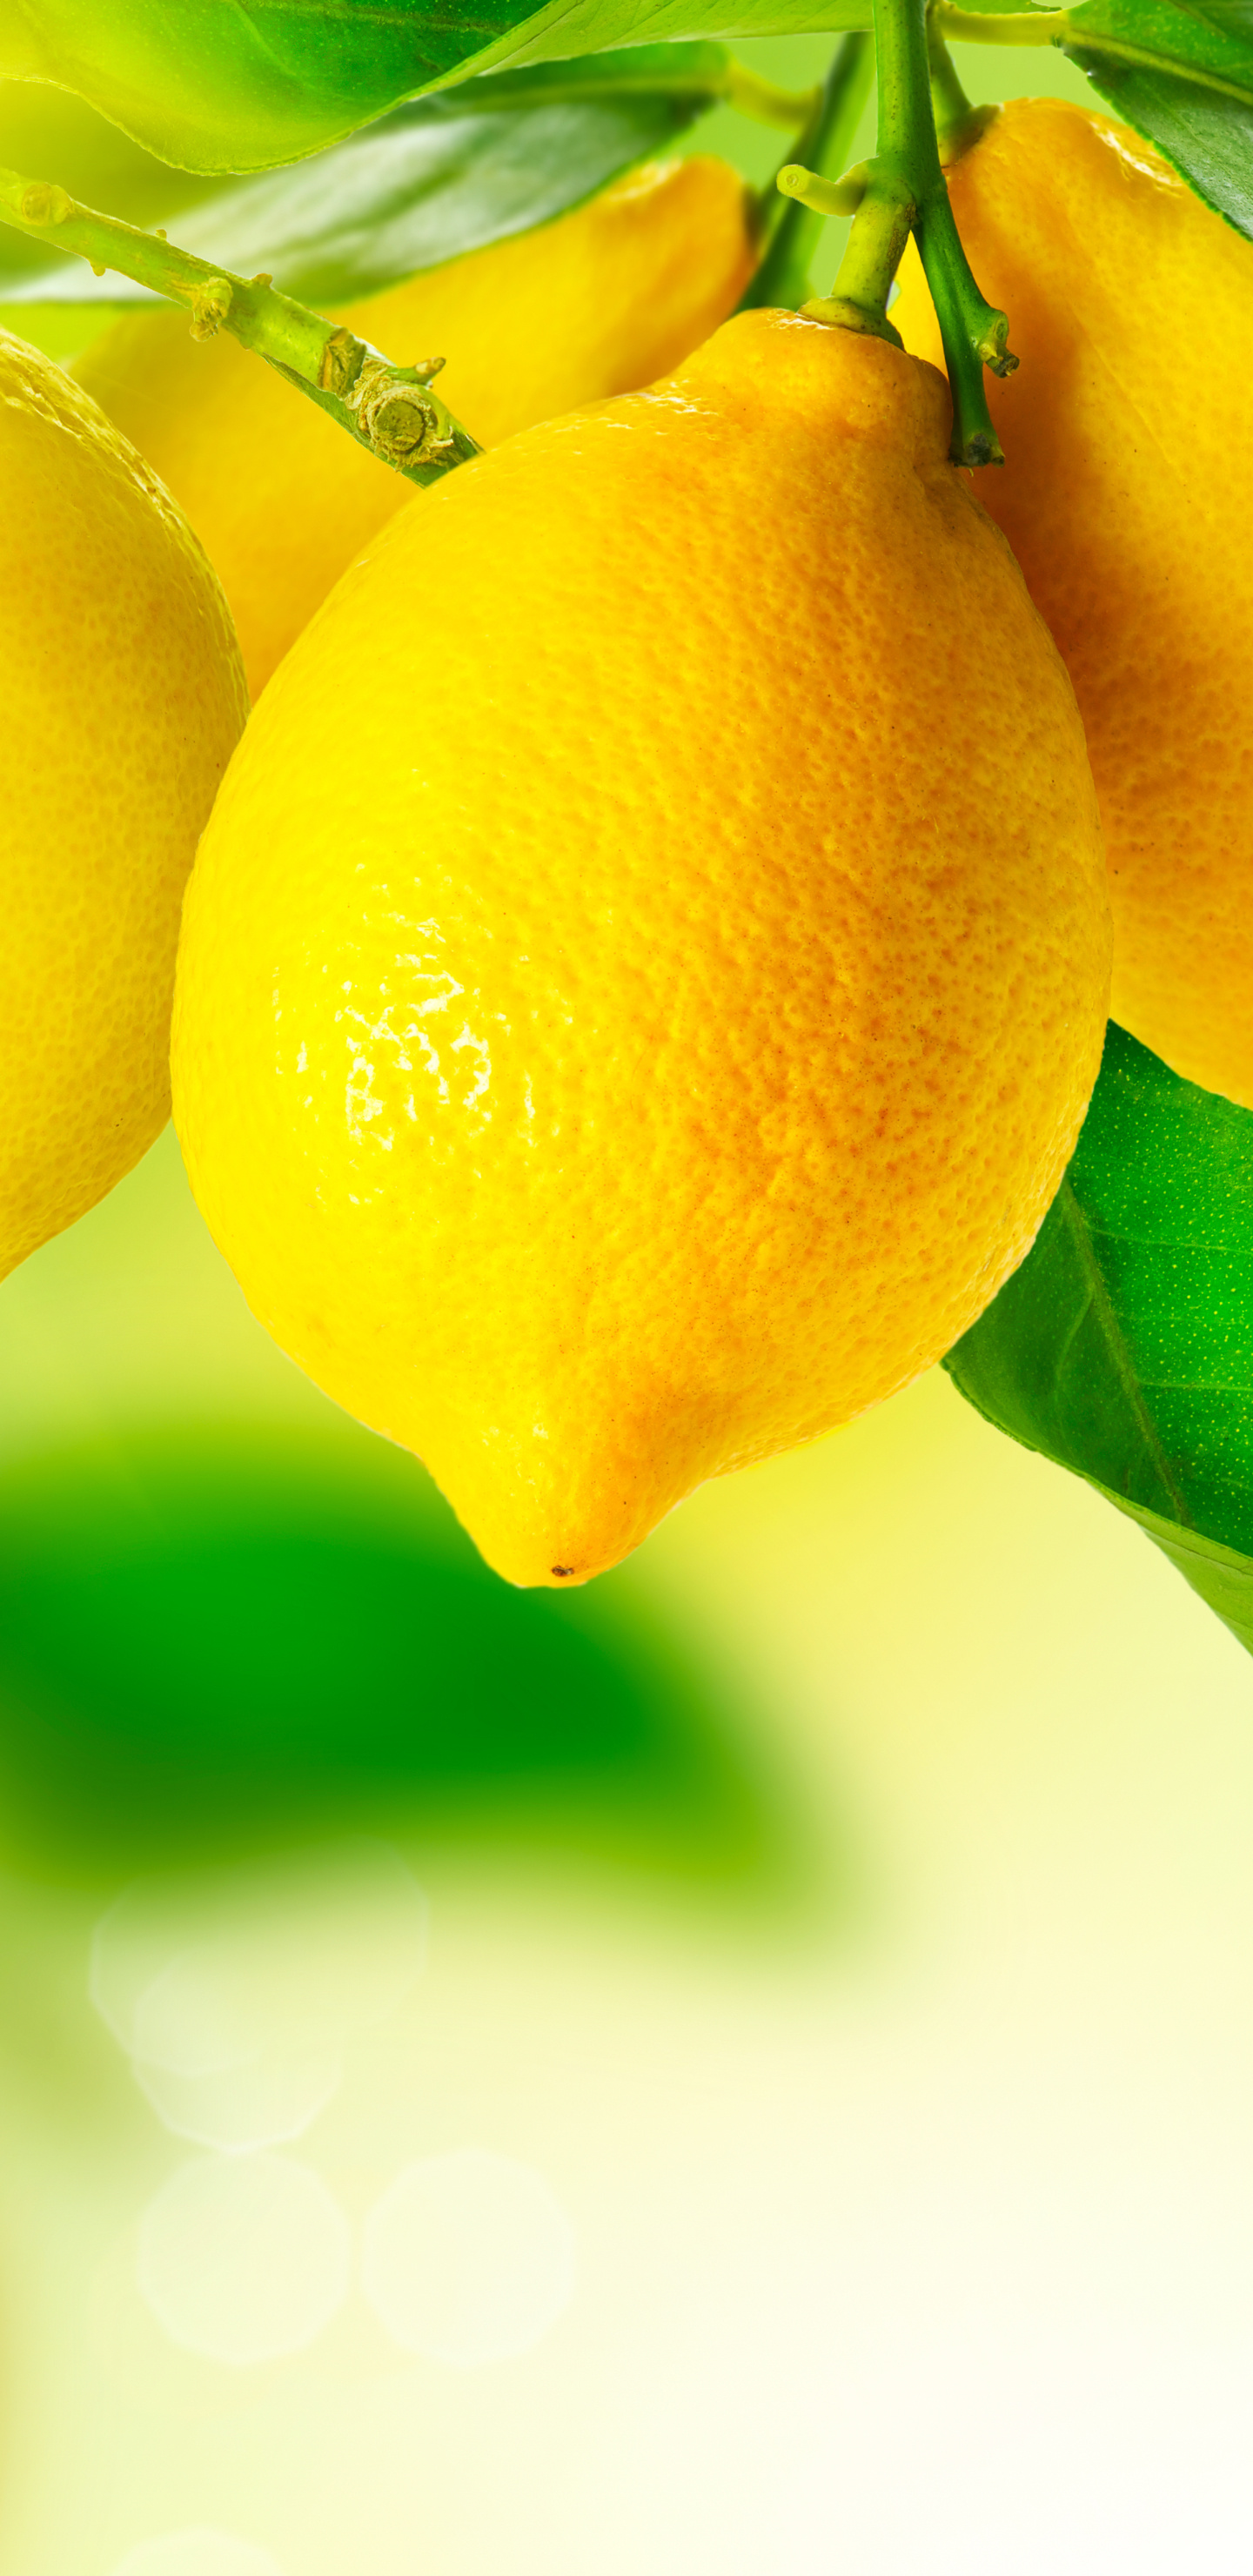 Lemon: Citrus, A rich source of vitamin C. 1440x2960 HD Wallpaper.